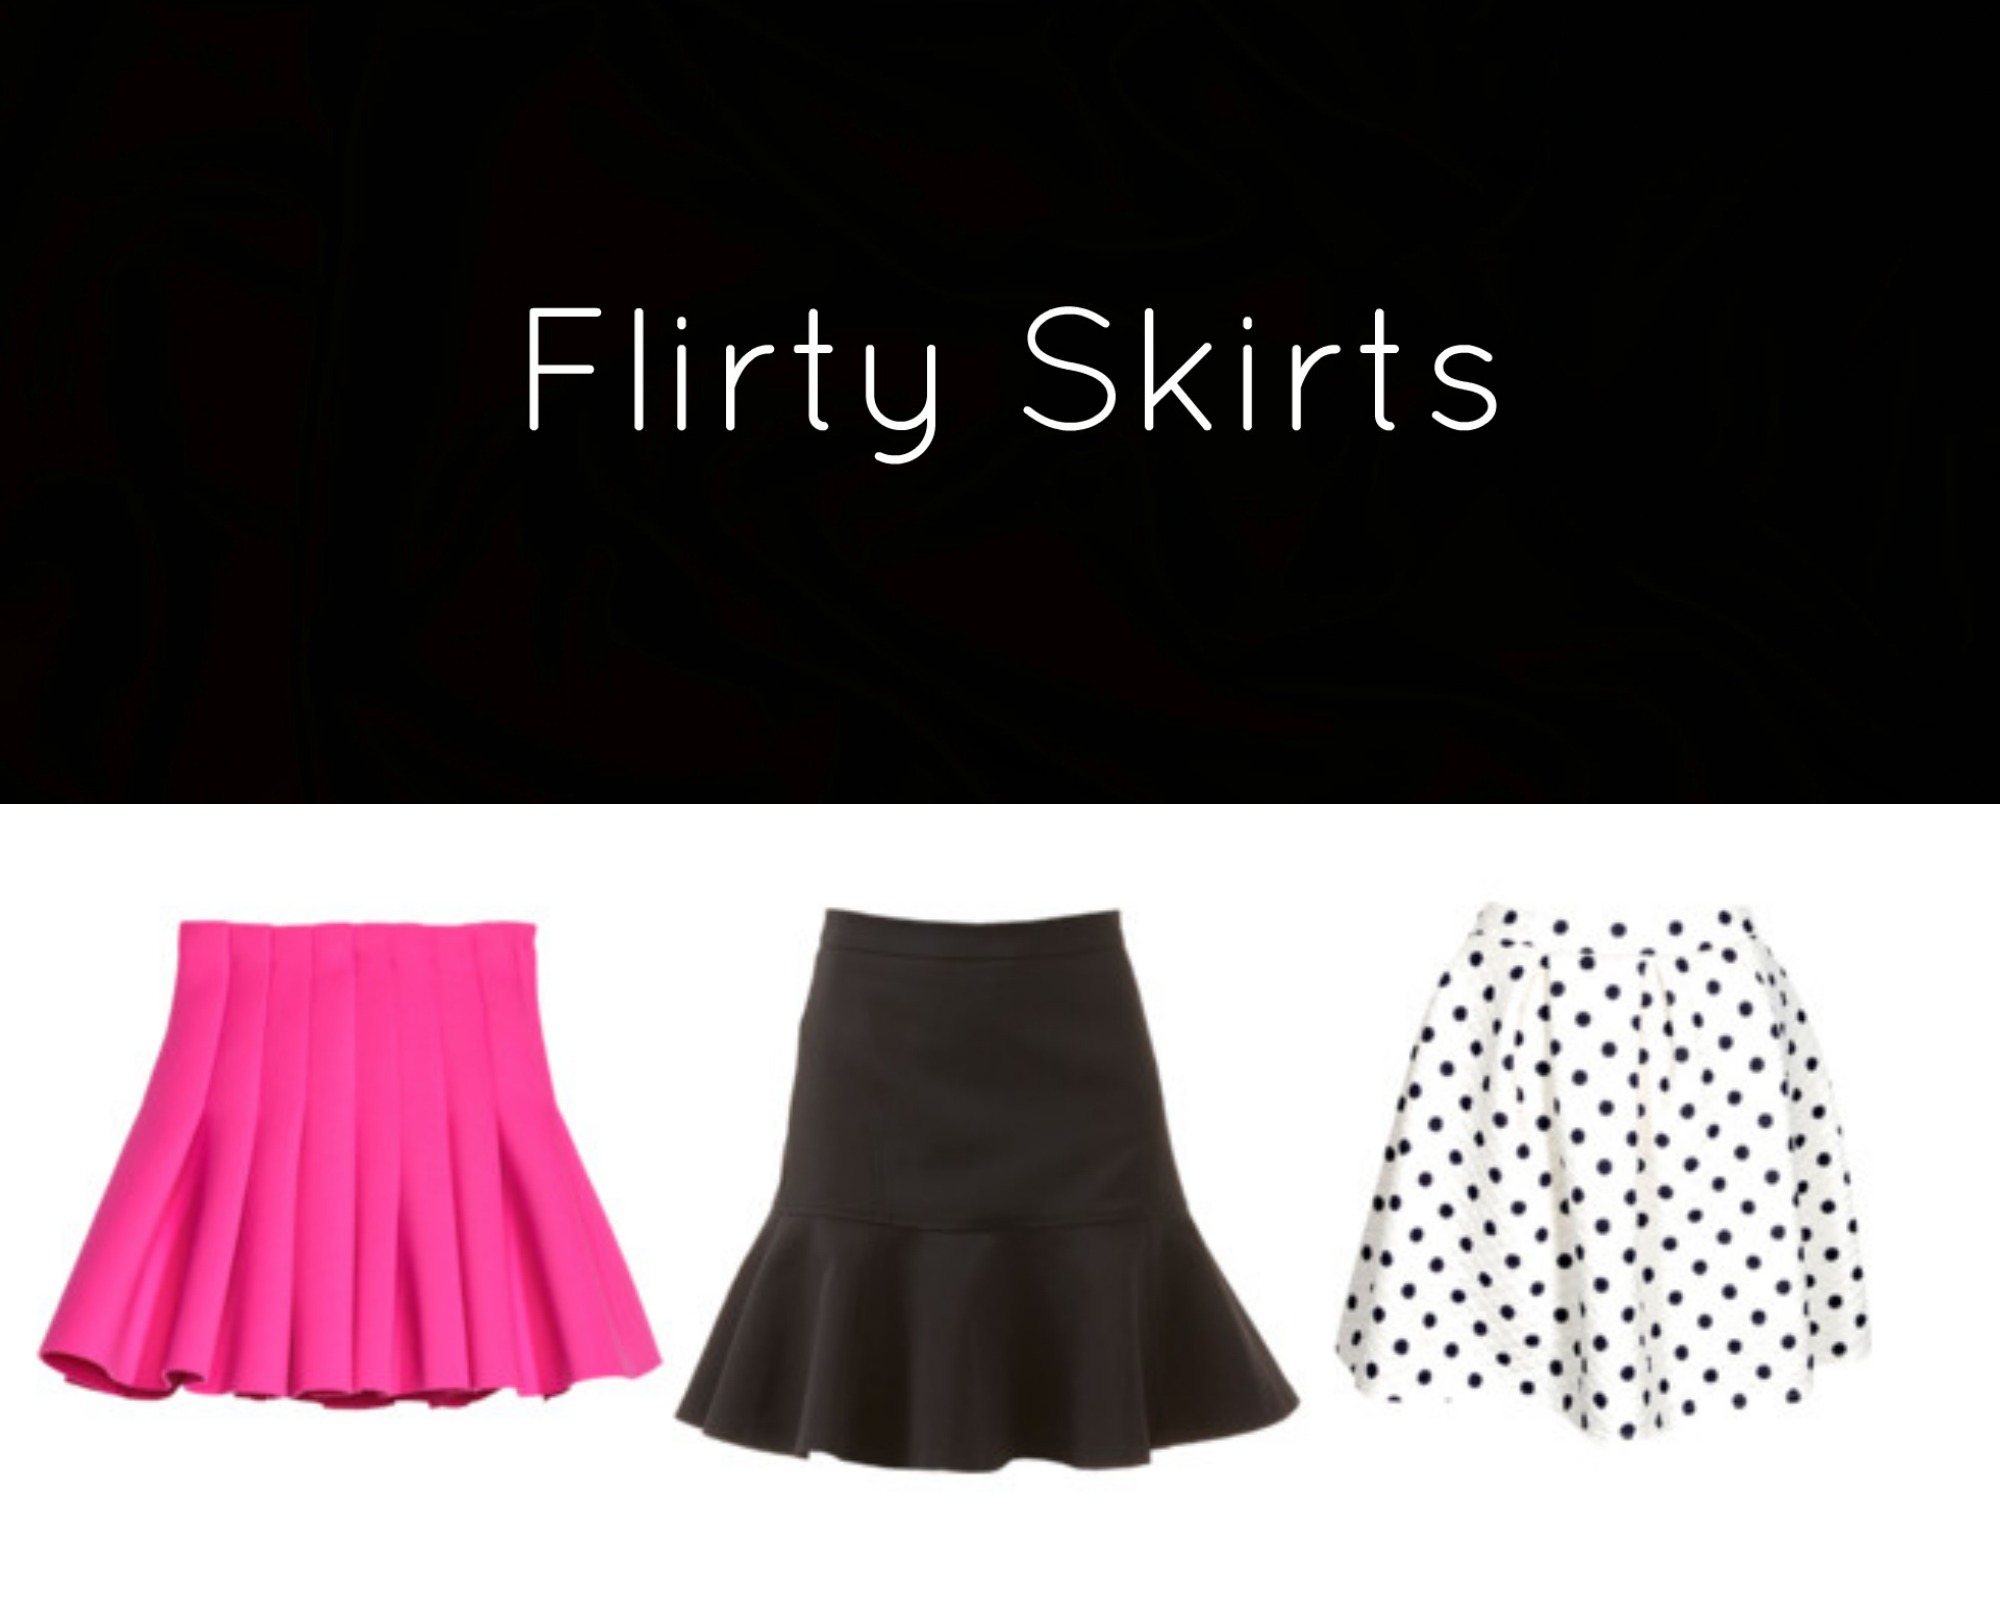 Flirty Skirts - Rachel's Lookbook